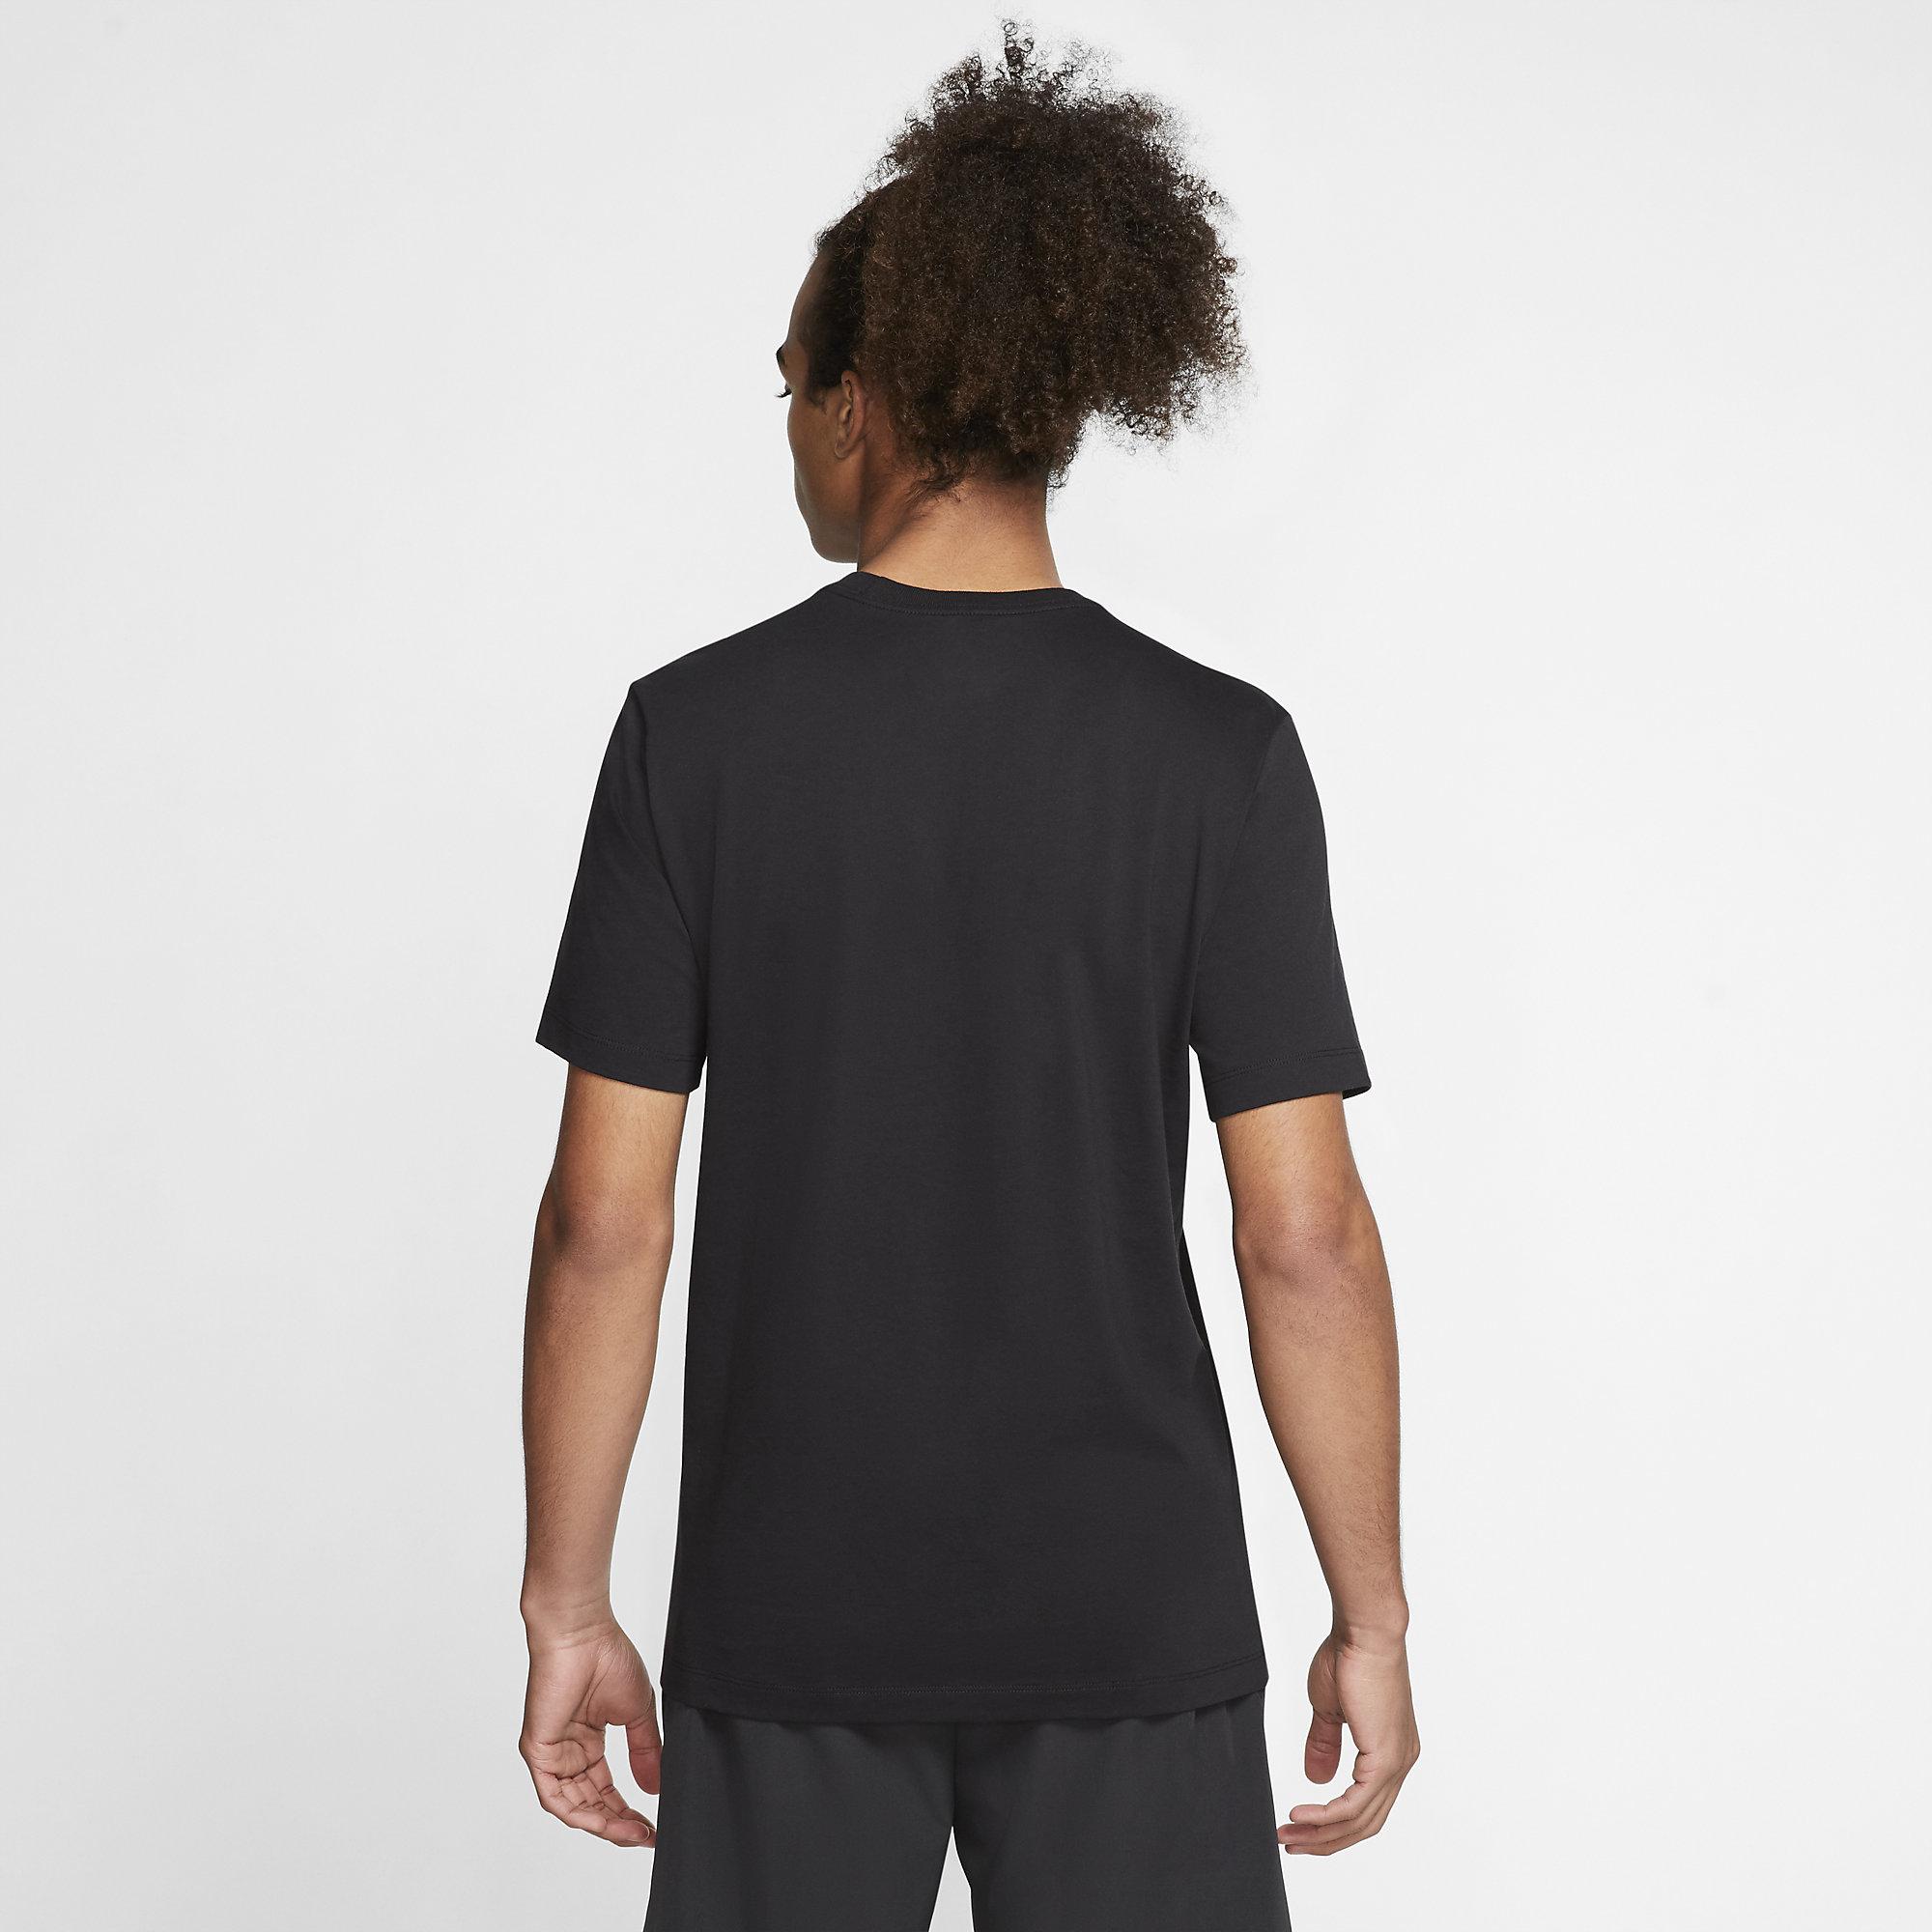 Nike Mens Tennis T-Shirt - Black - Tennisnuts.com